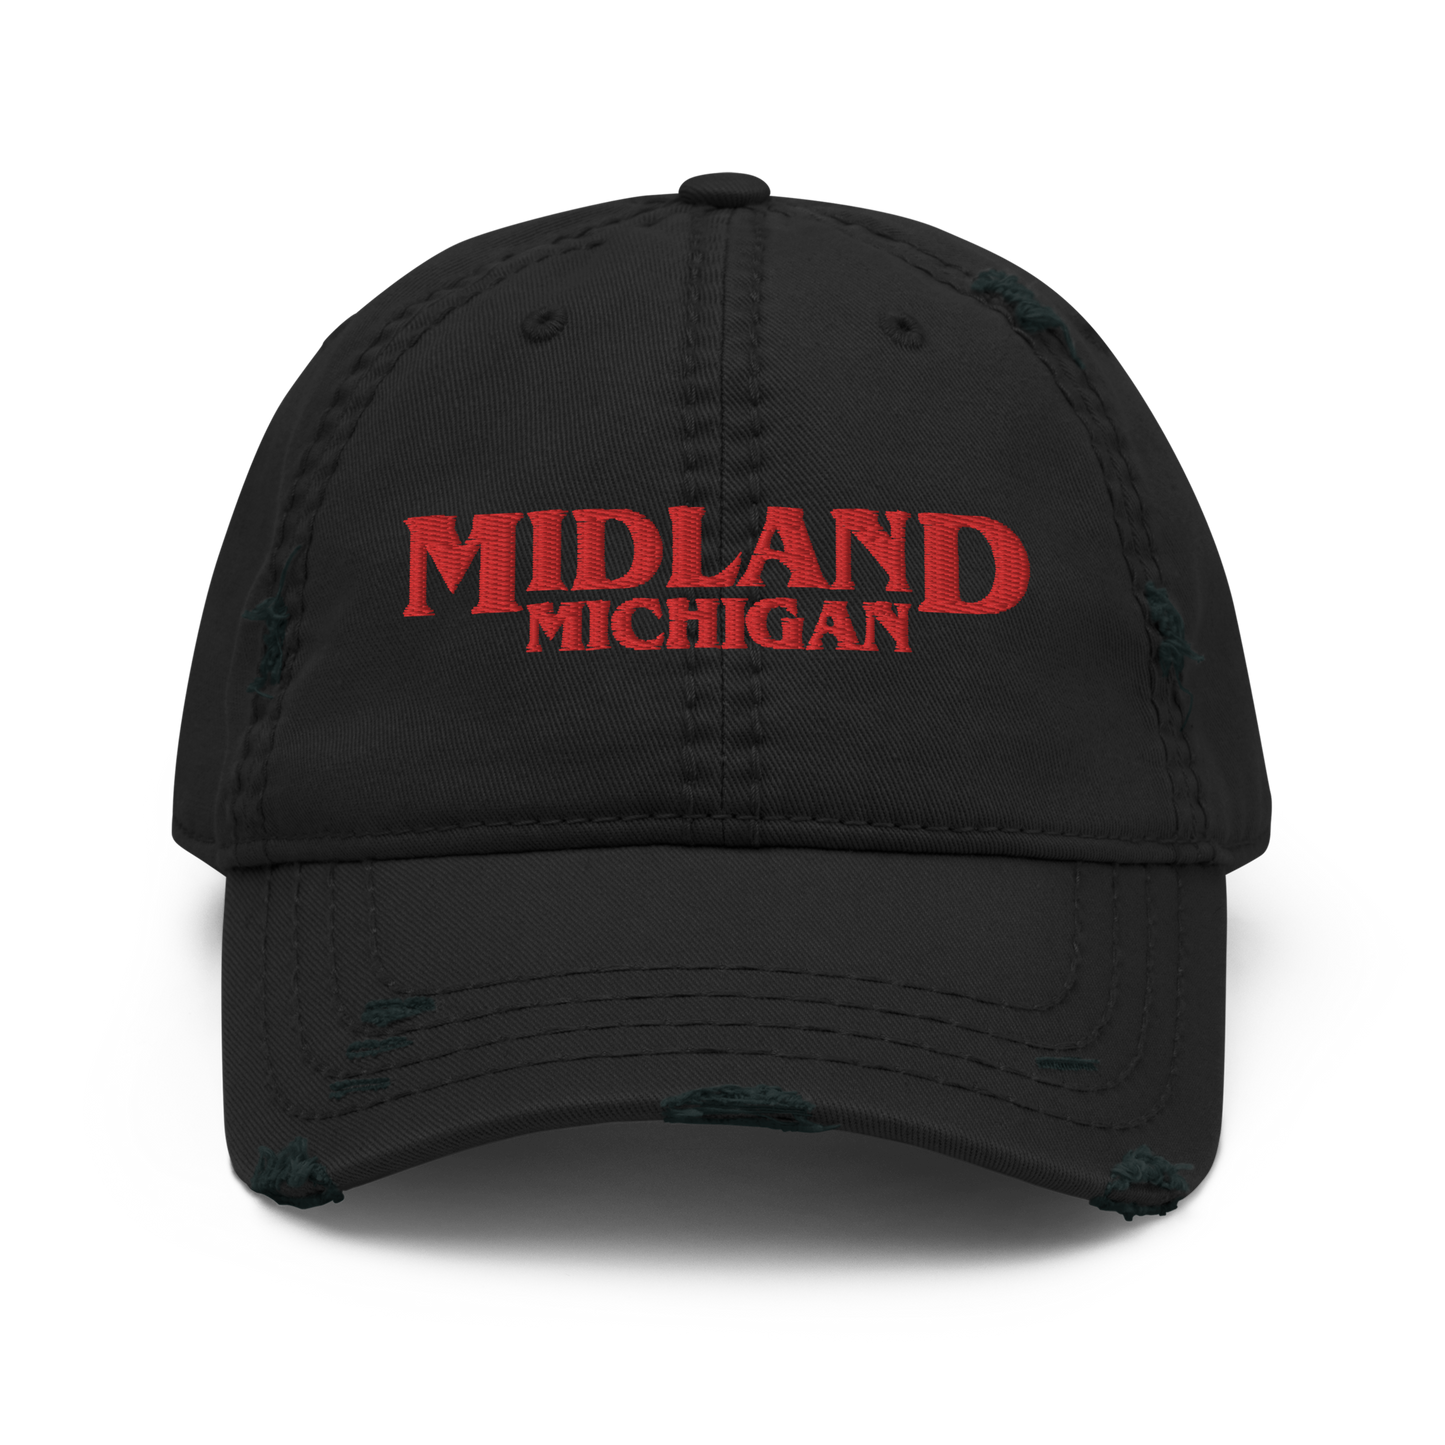 'Midland Michigan' Distressed Dad Hat (1980s Drama Parody)